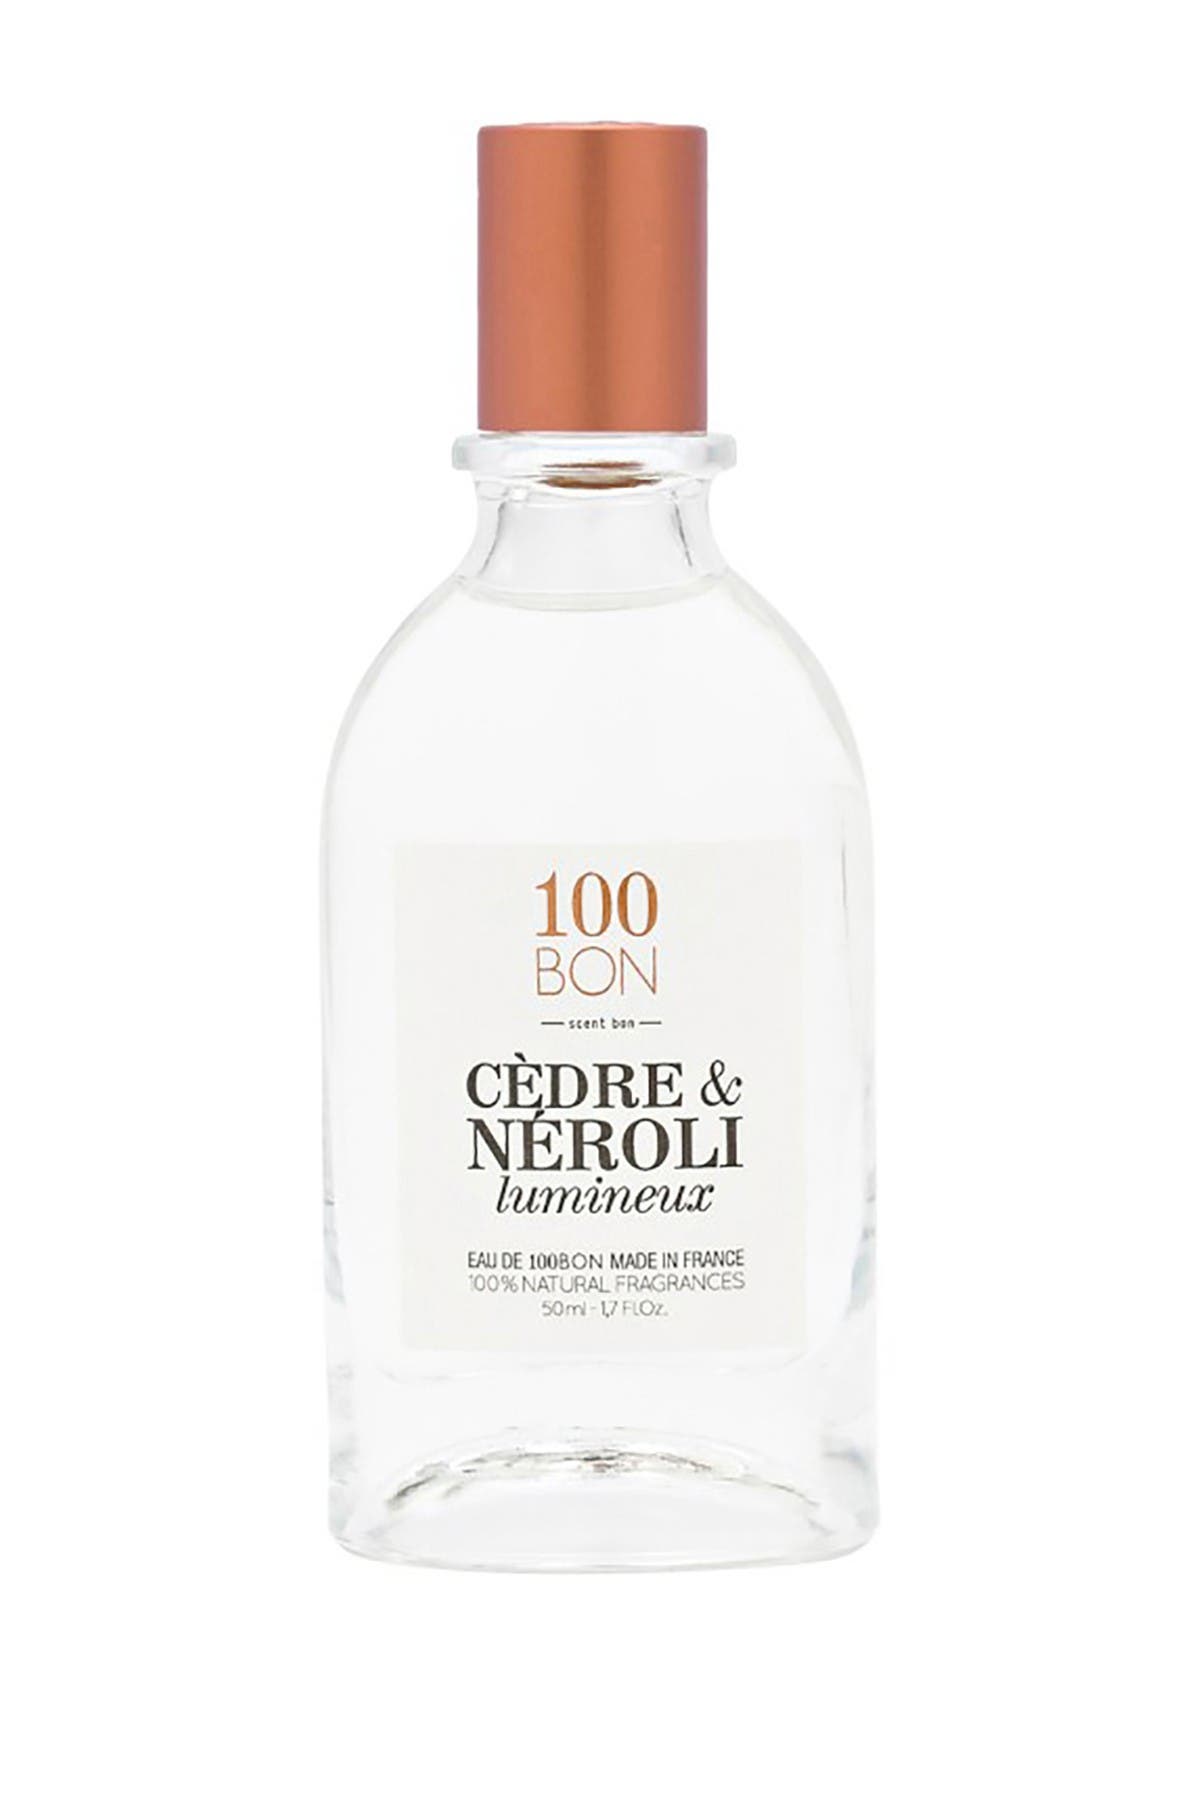 Cedre & Neroli Lumineux 100% Natural Fragrance Spray - 1.7oz. 100BON